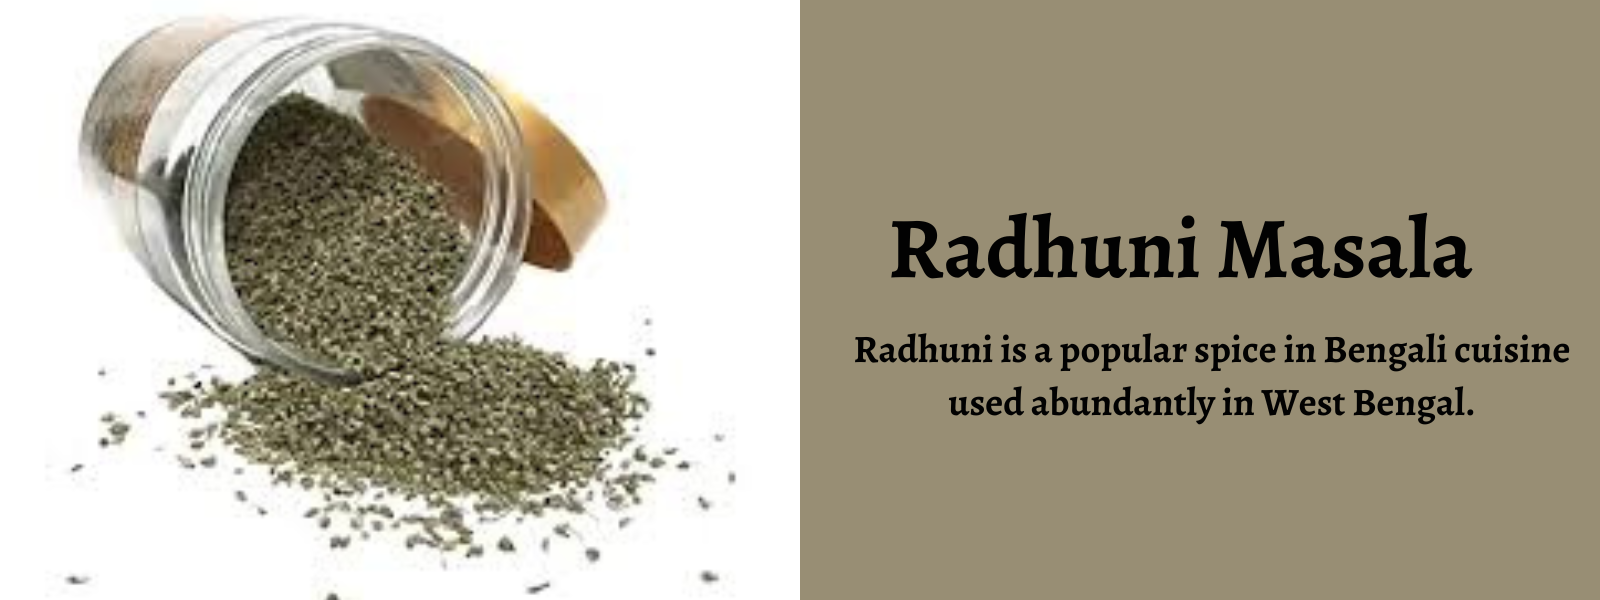 Radhuni  Masala- Health Benefits, Uses and Important Facts